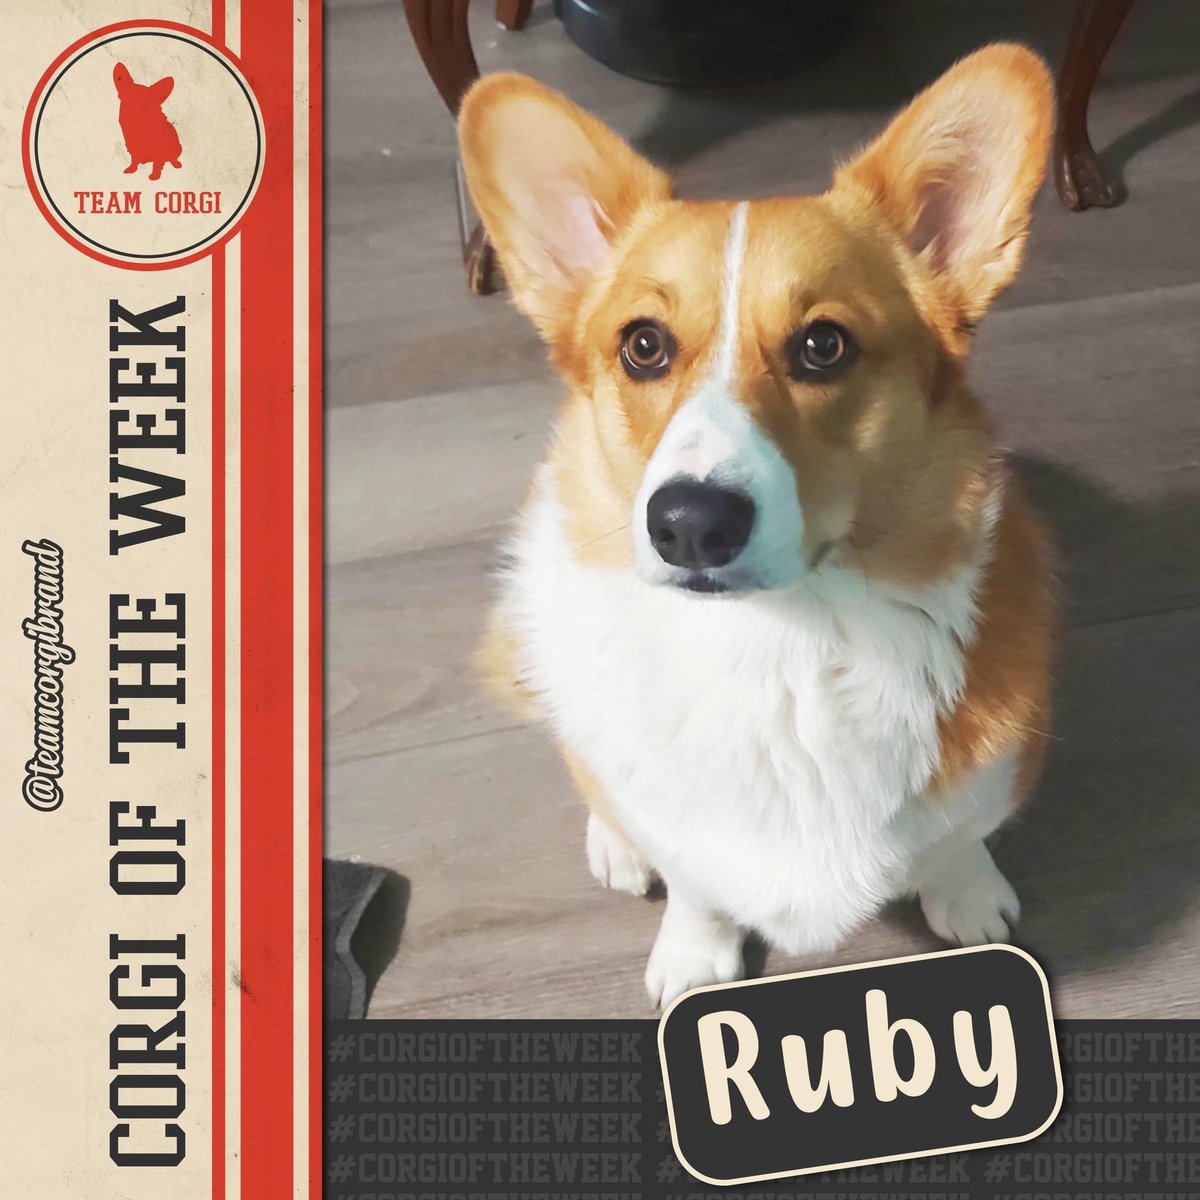 This week’s #CorgioftheWeek is Ruby!

teamcorgibrand.com/pages/corgi-of…

#TeamCorgi #CorgiCrew